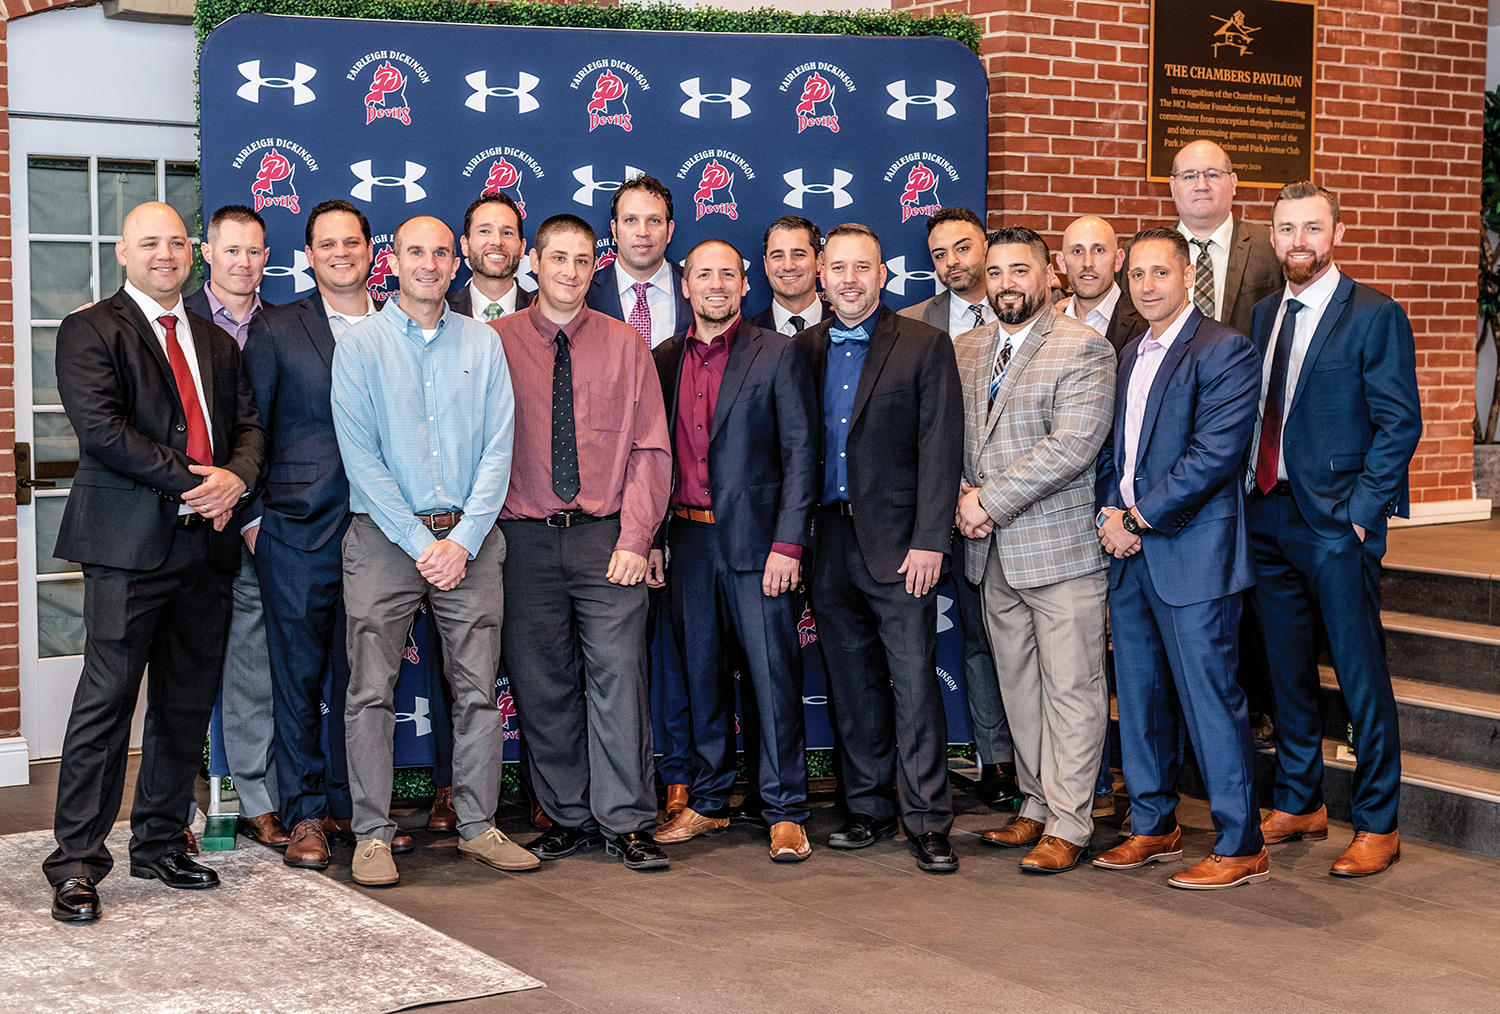 The FDU 2022 baseball team stands together